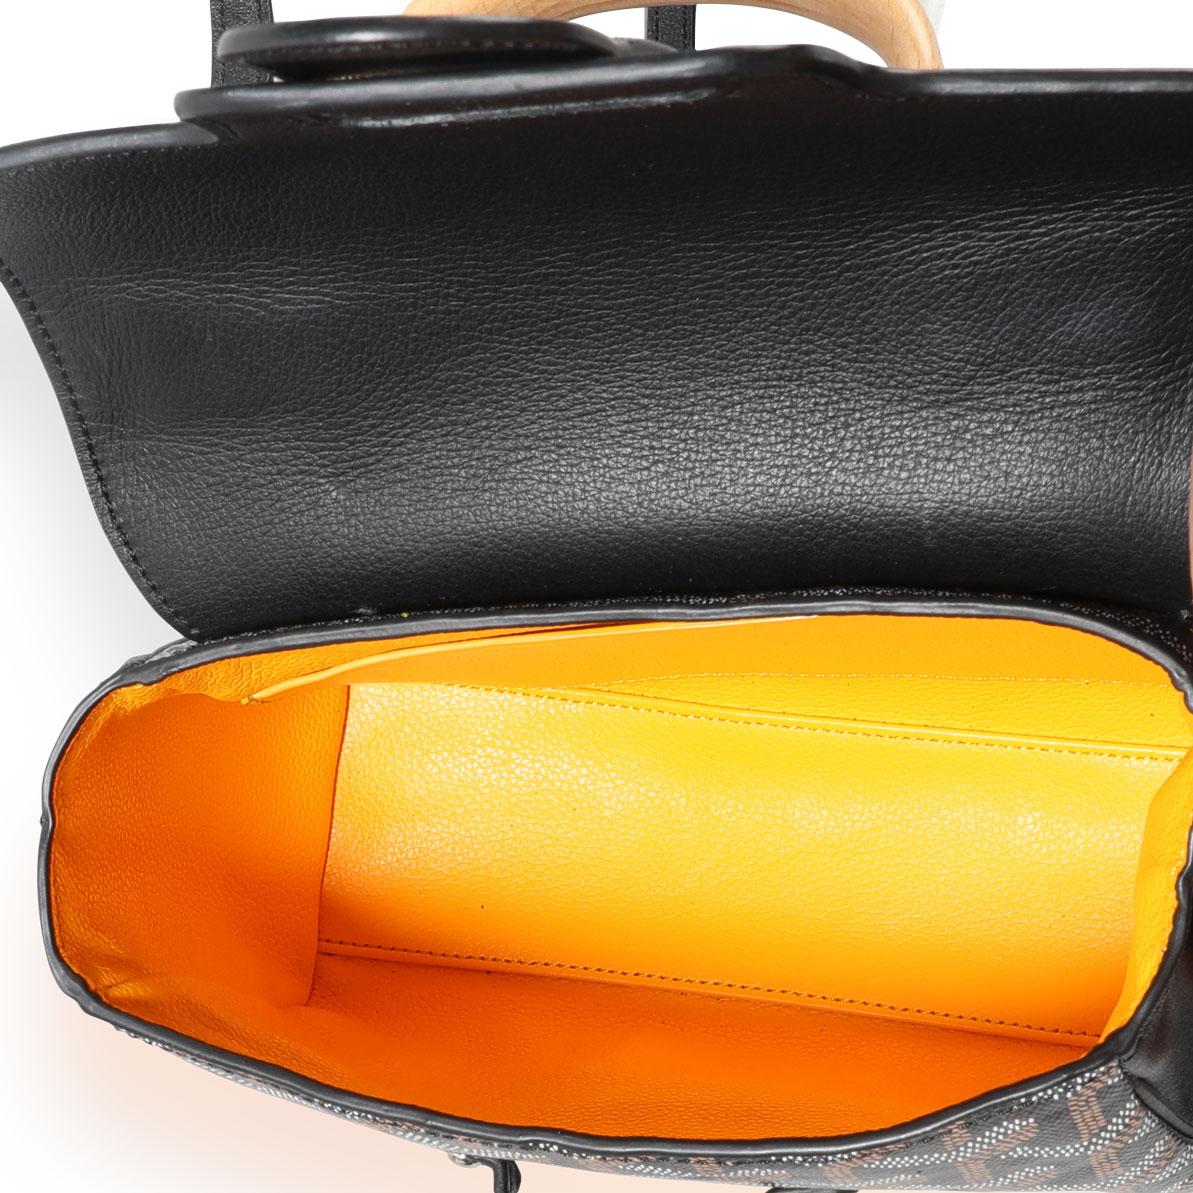 Goyard Black Goyardine Mini Saigon Bag
SKU: 111559
MSRP:  
Condition: Pre-owned (3000)
Condition Description: 
Handbag Condition: Very Good
Condition Comments: Very Good Condition. Structure loss. Wrinkling to leather.
Brand: Goyard
Model: